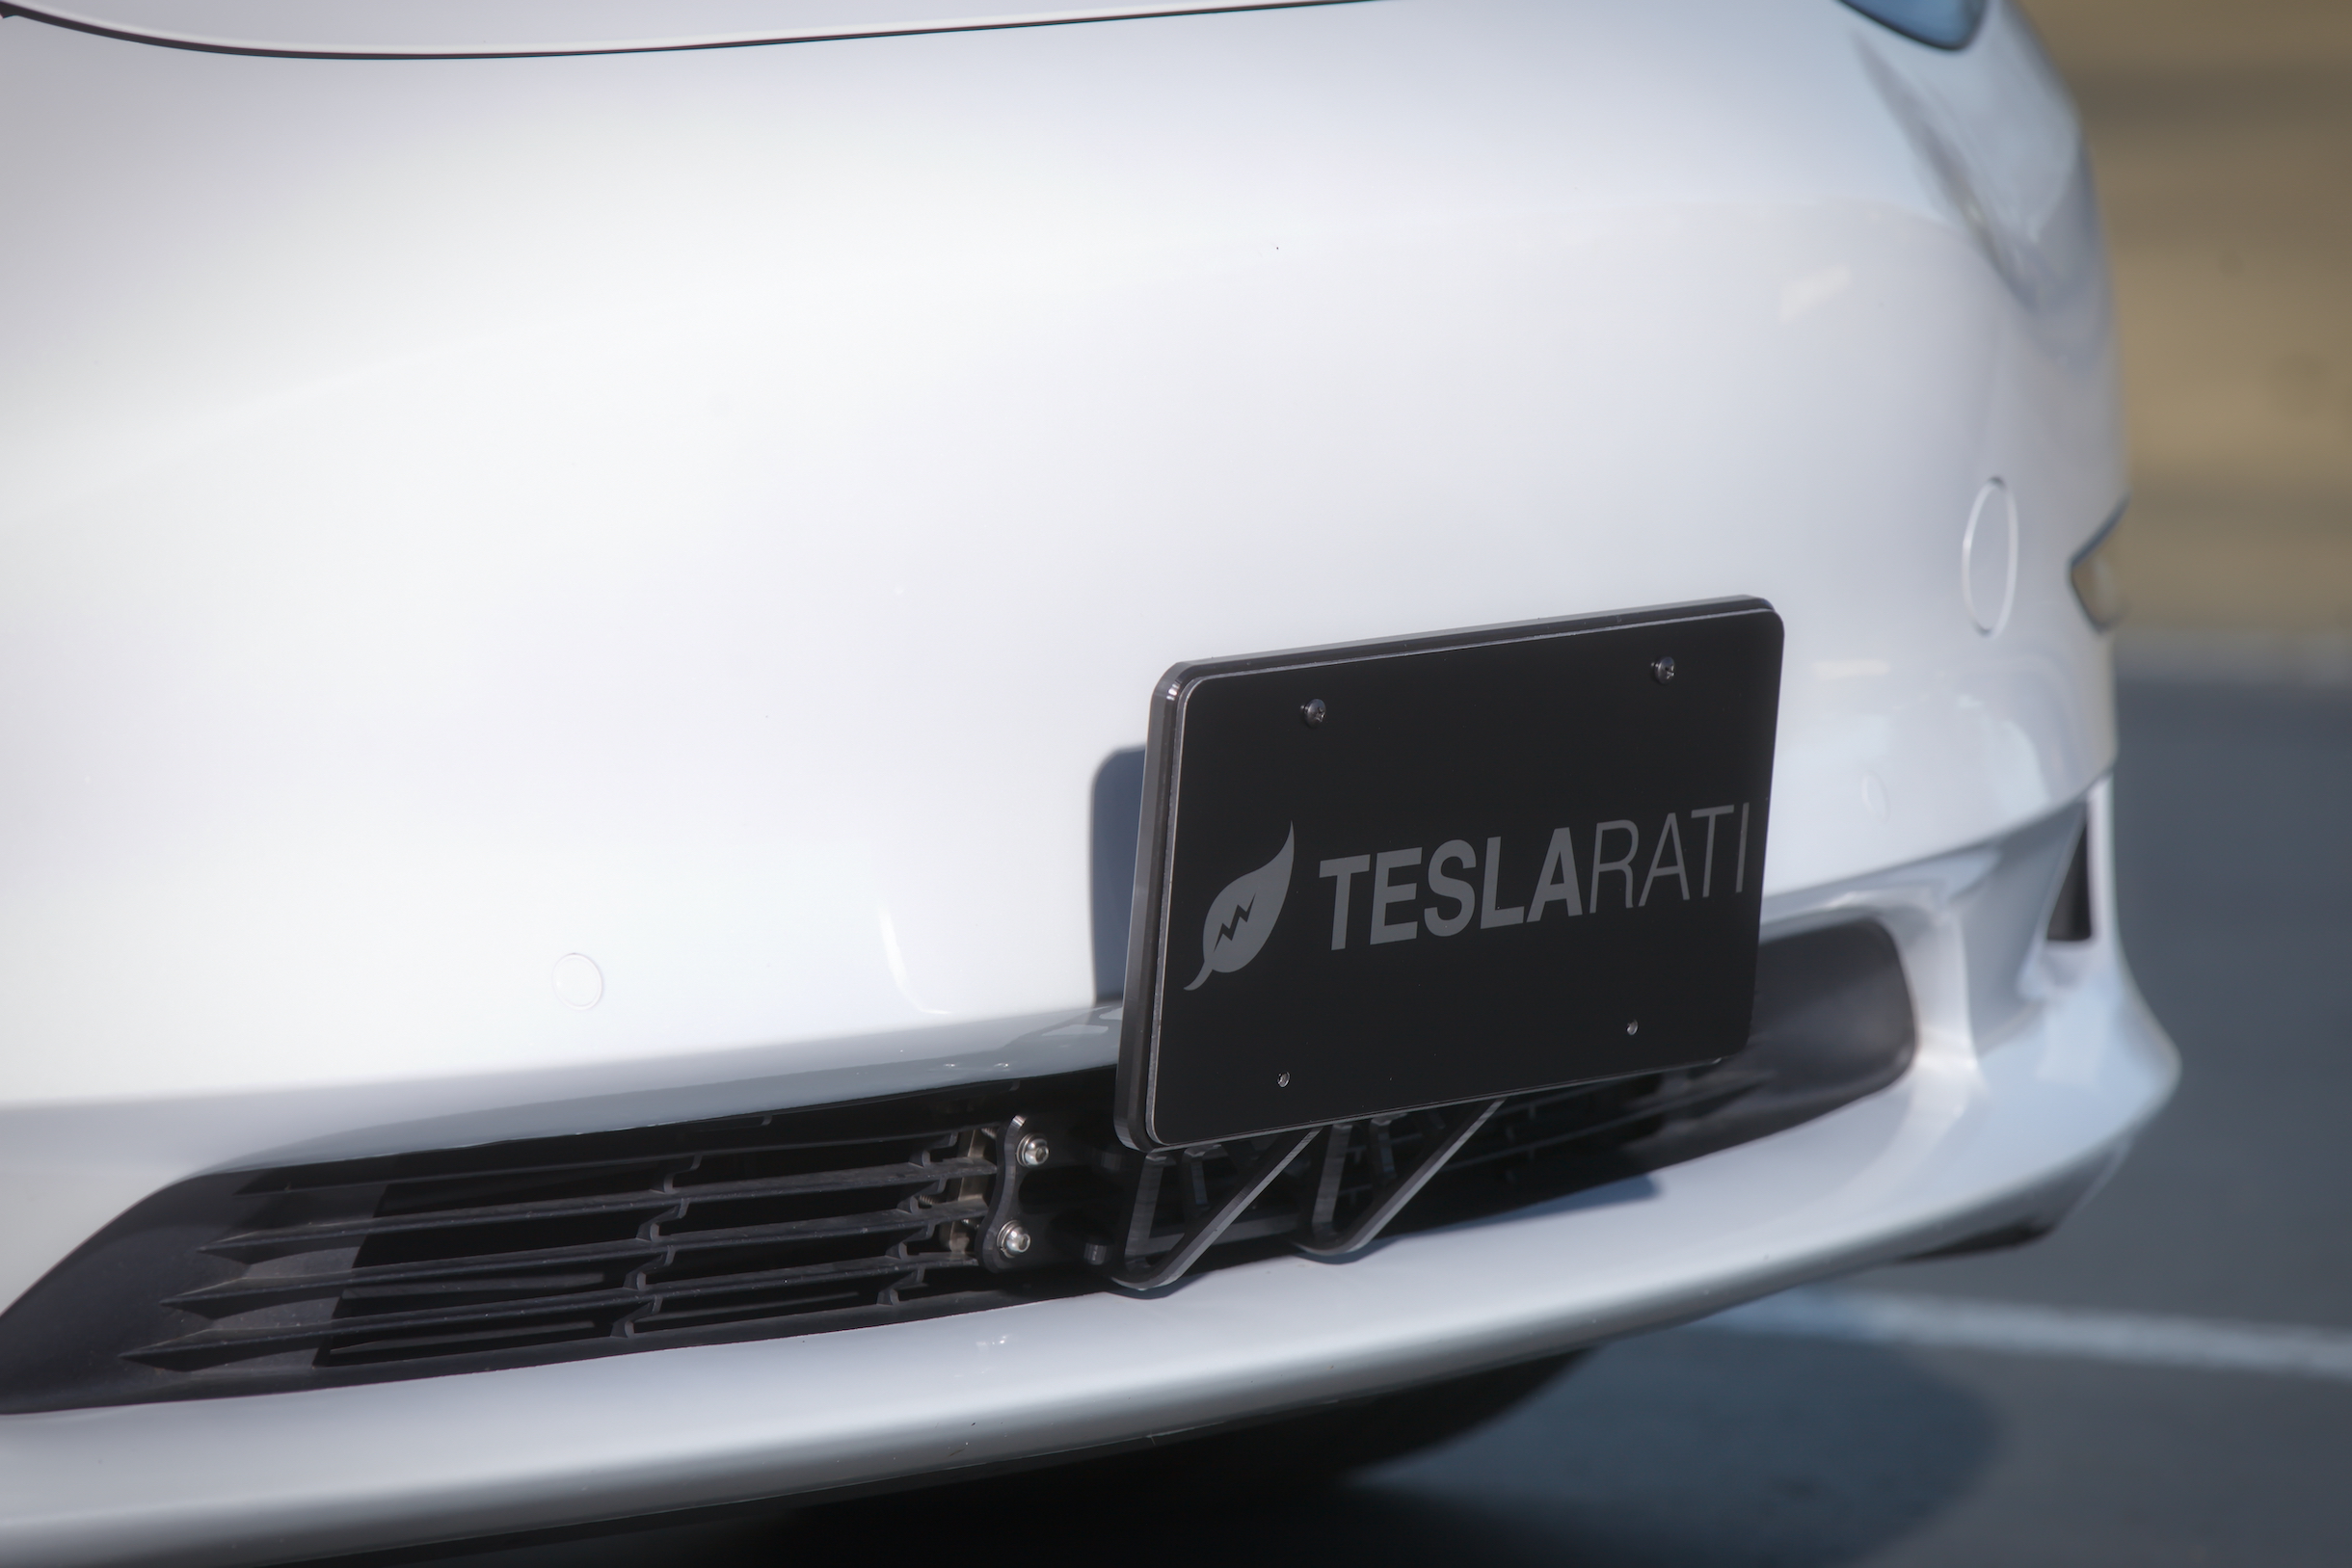 tesla-model-3-front-license-plate-mount-teslarati-vanity